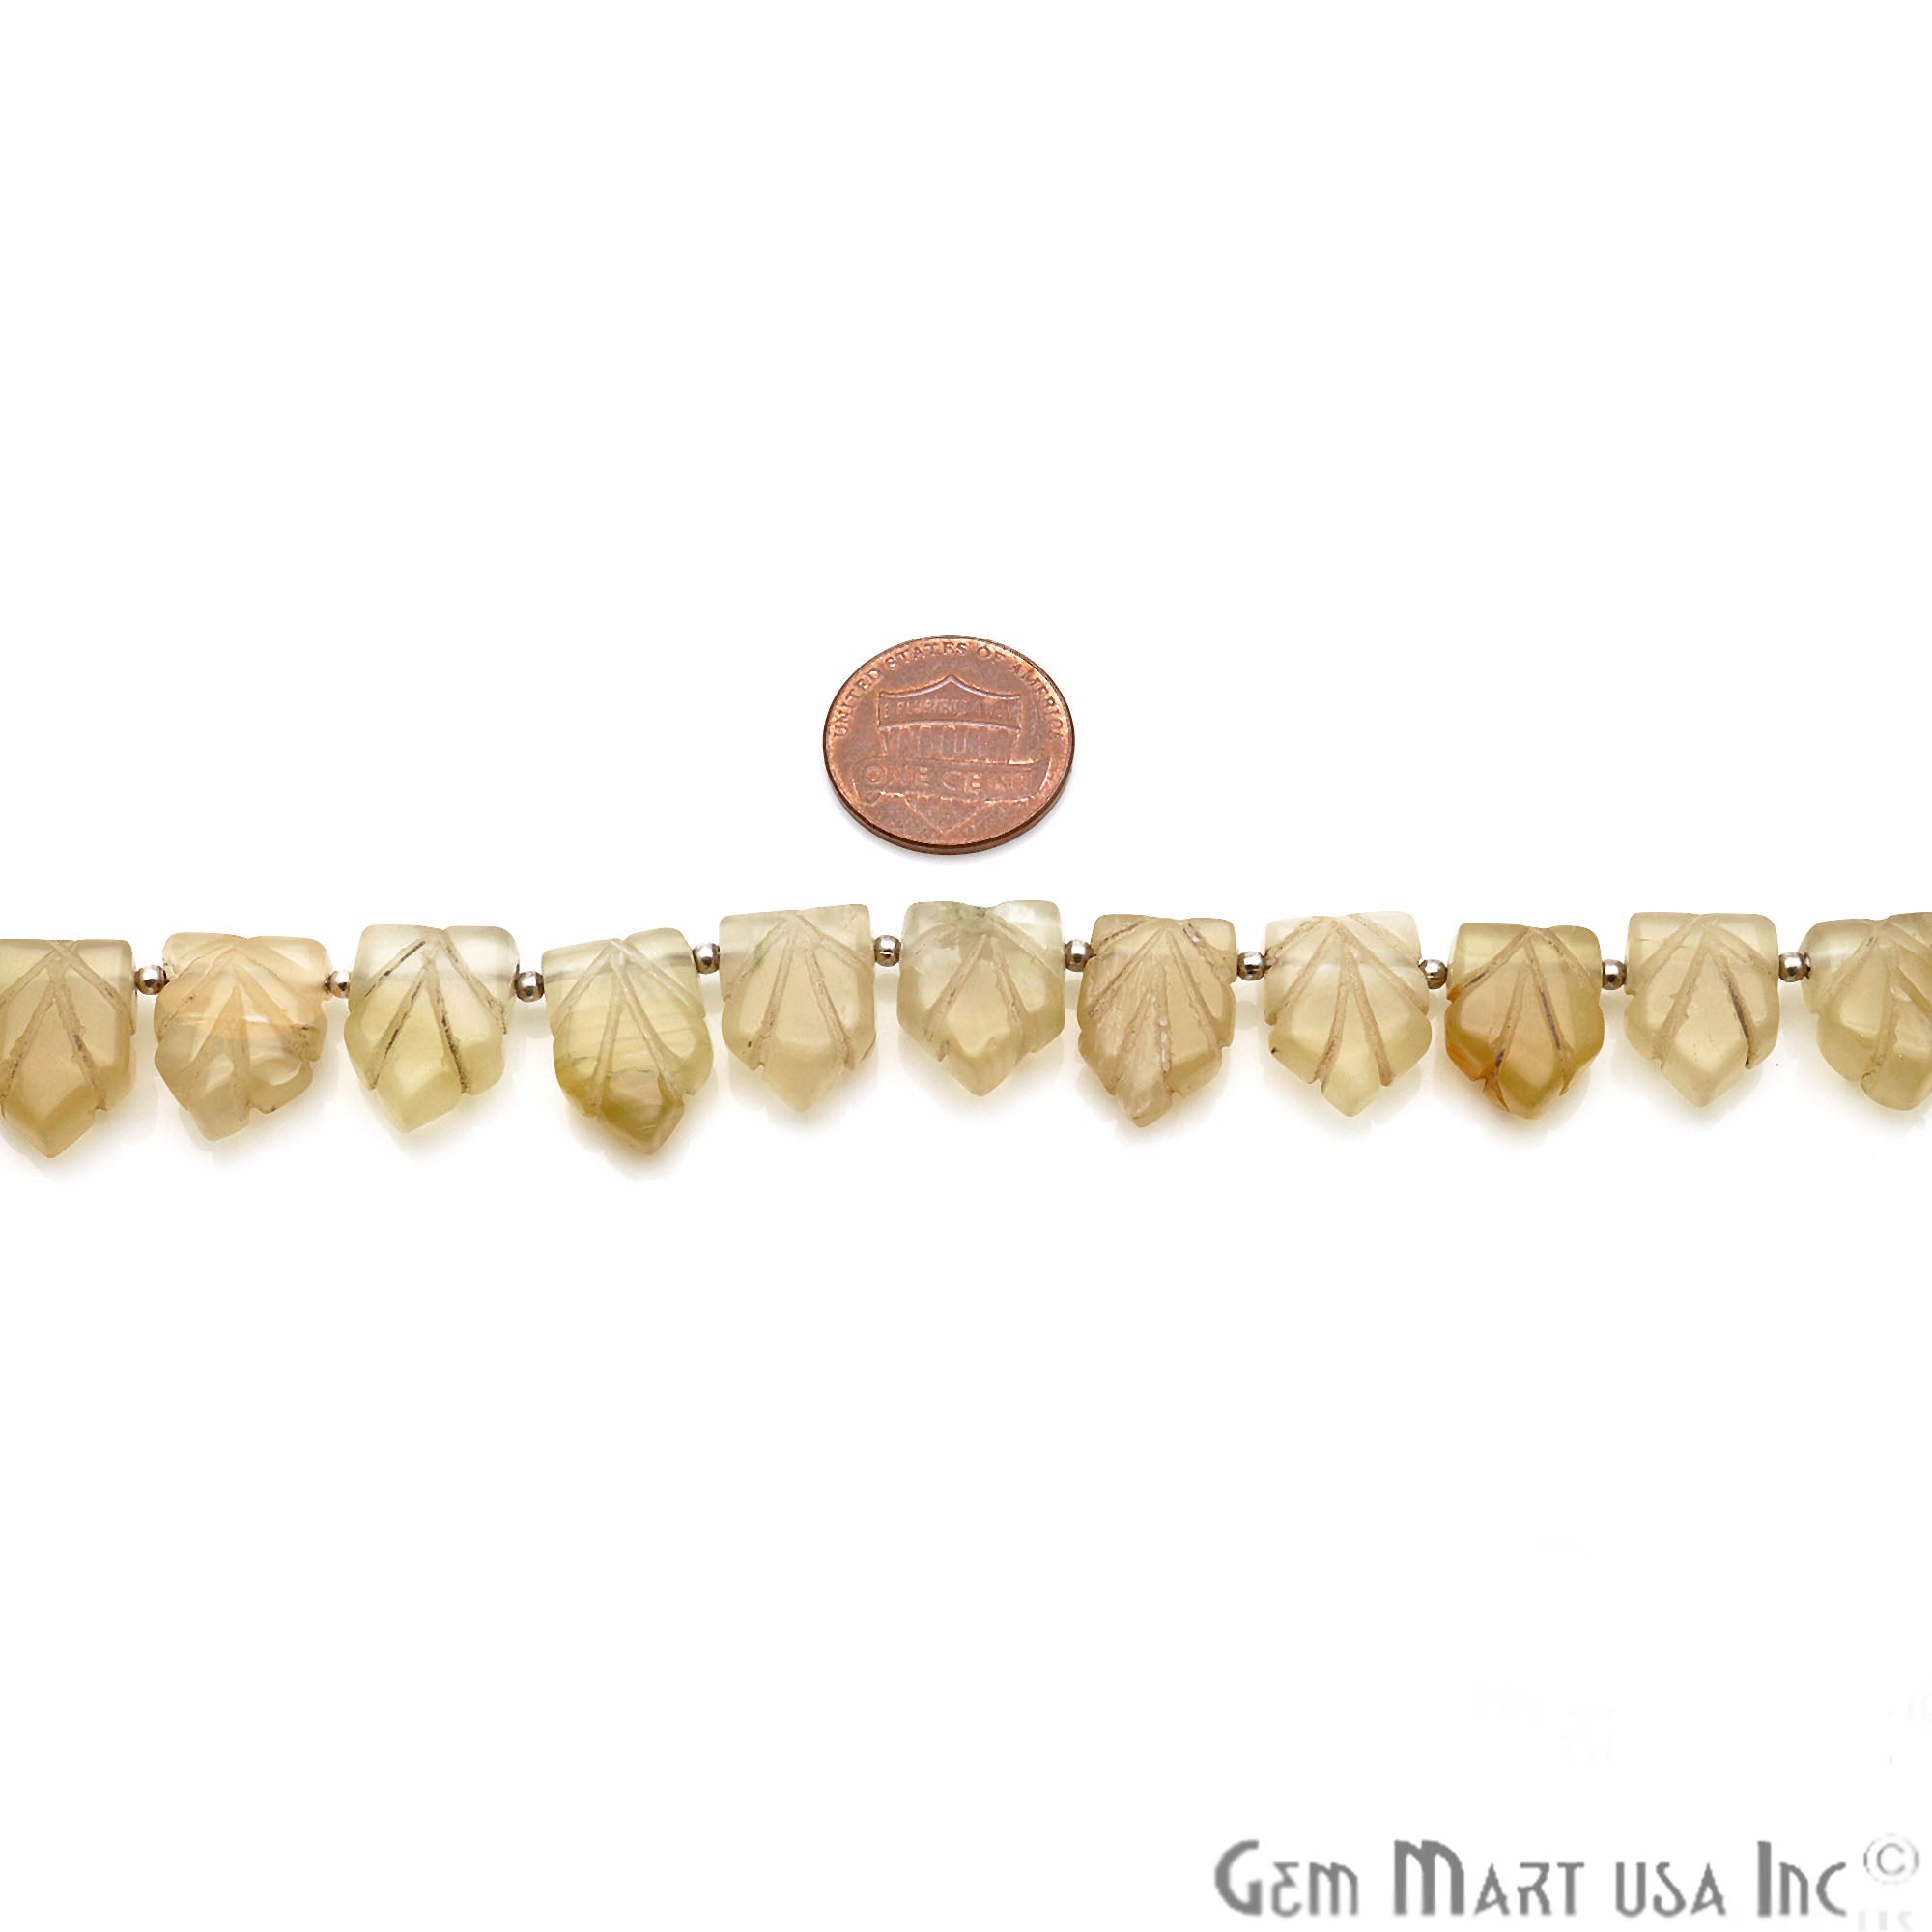 Yellow Chalcedony Pentagon 17x12mm Crafting Beads Gemstone Briolette Strands 8 INCH - GemMartUSA